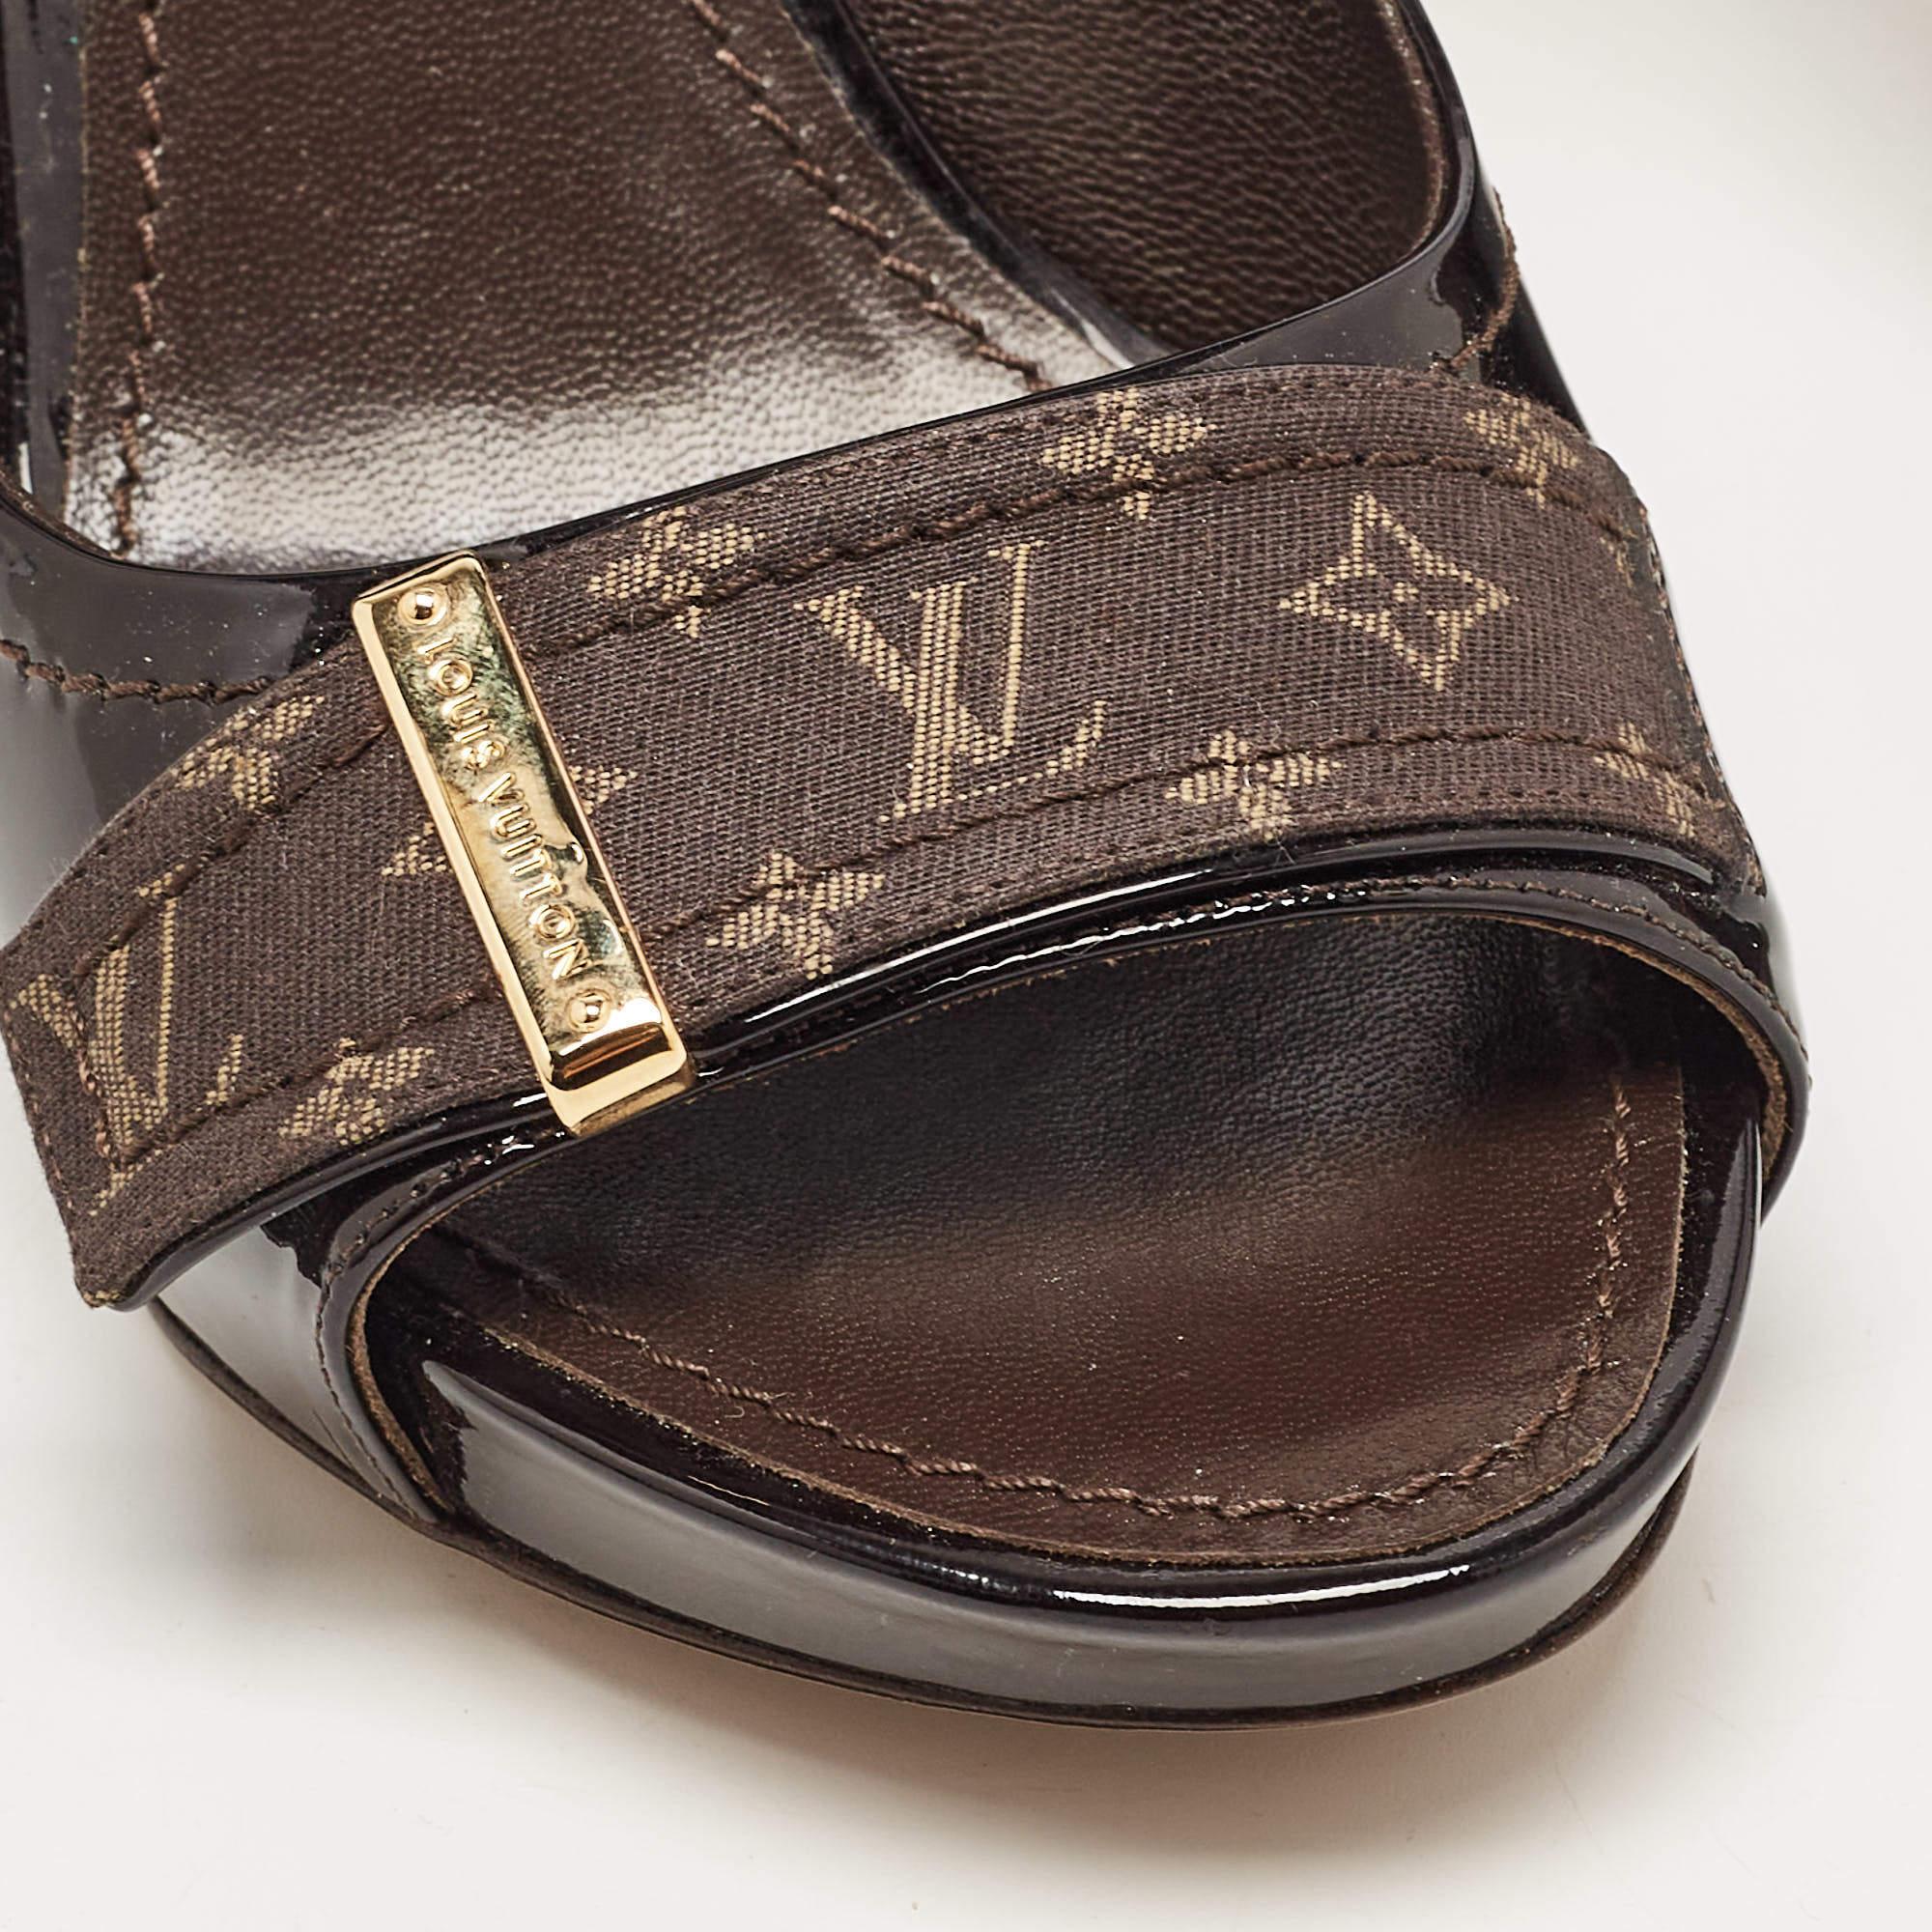 Louis Vuitton Dark Burgundy Patent Leather Open Toe Pumps Size 37.5 For Sale 4